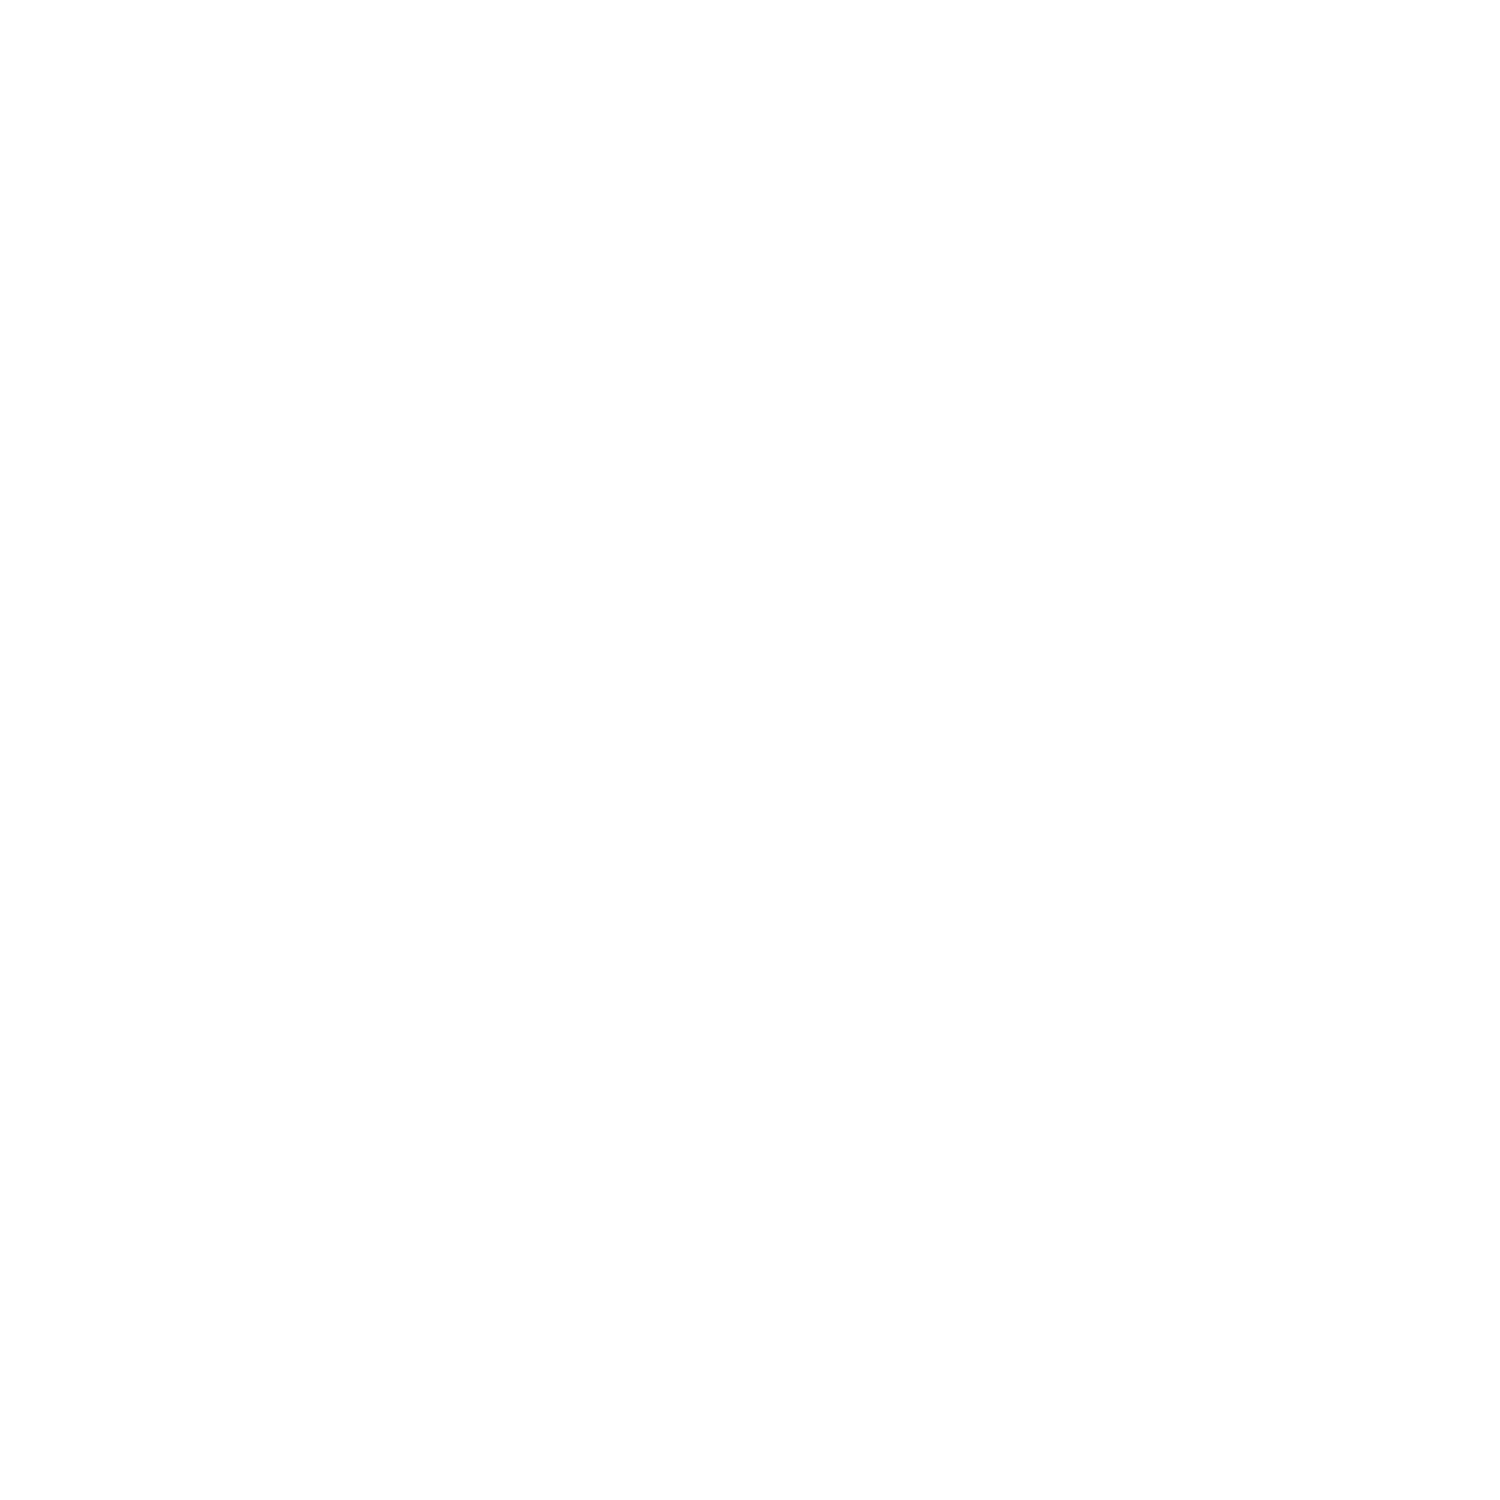 AIR communities